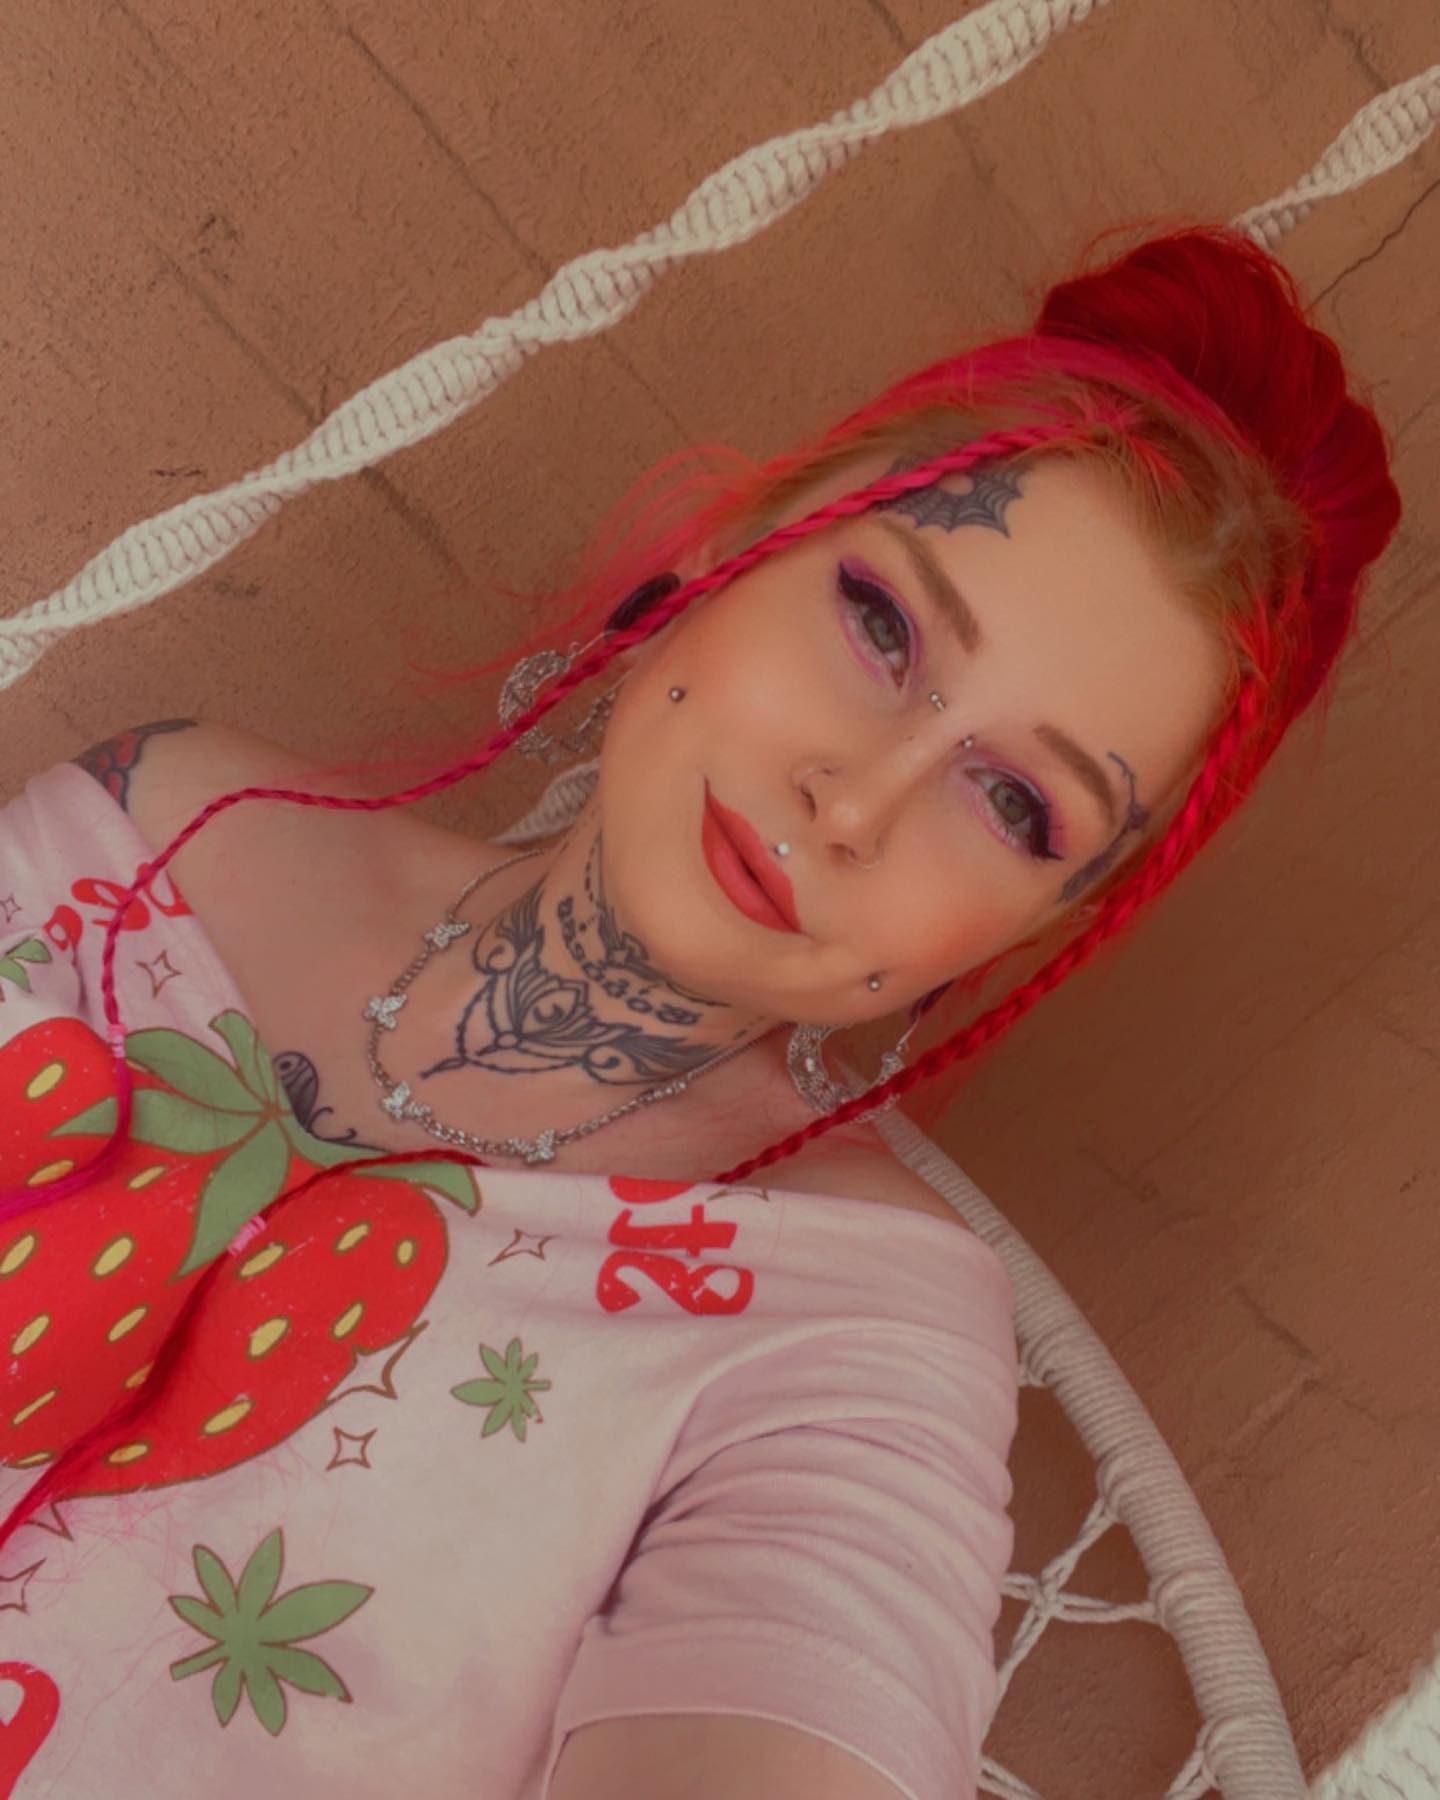 Strawberry vibes 🍓🌻 #strawberry #selflove #420 #goodvibes #piercings #ootd